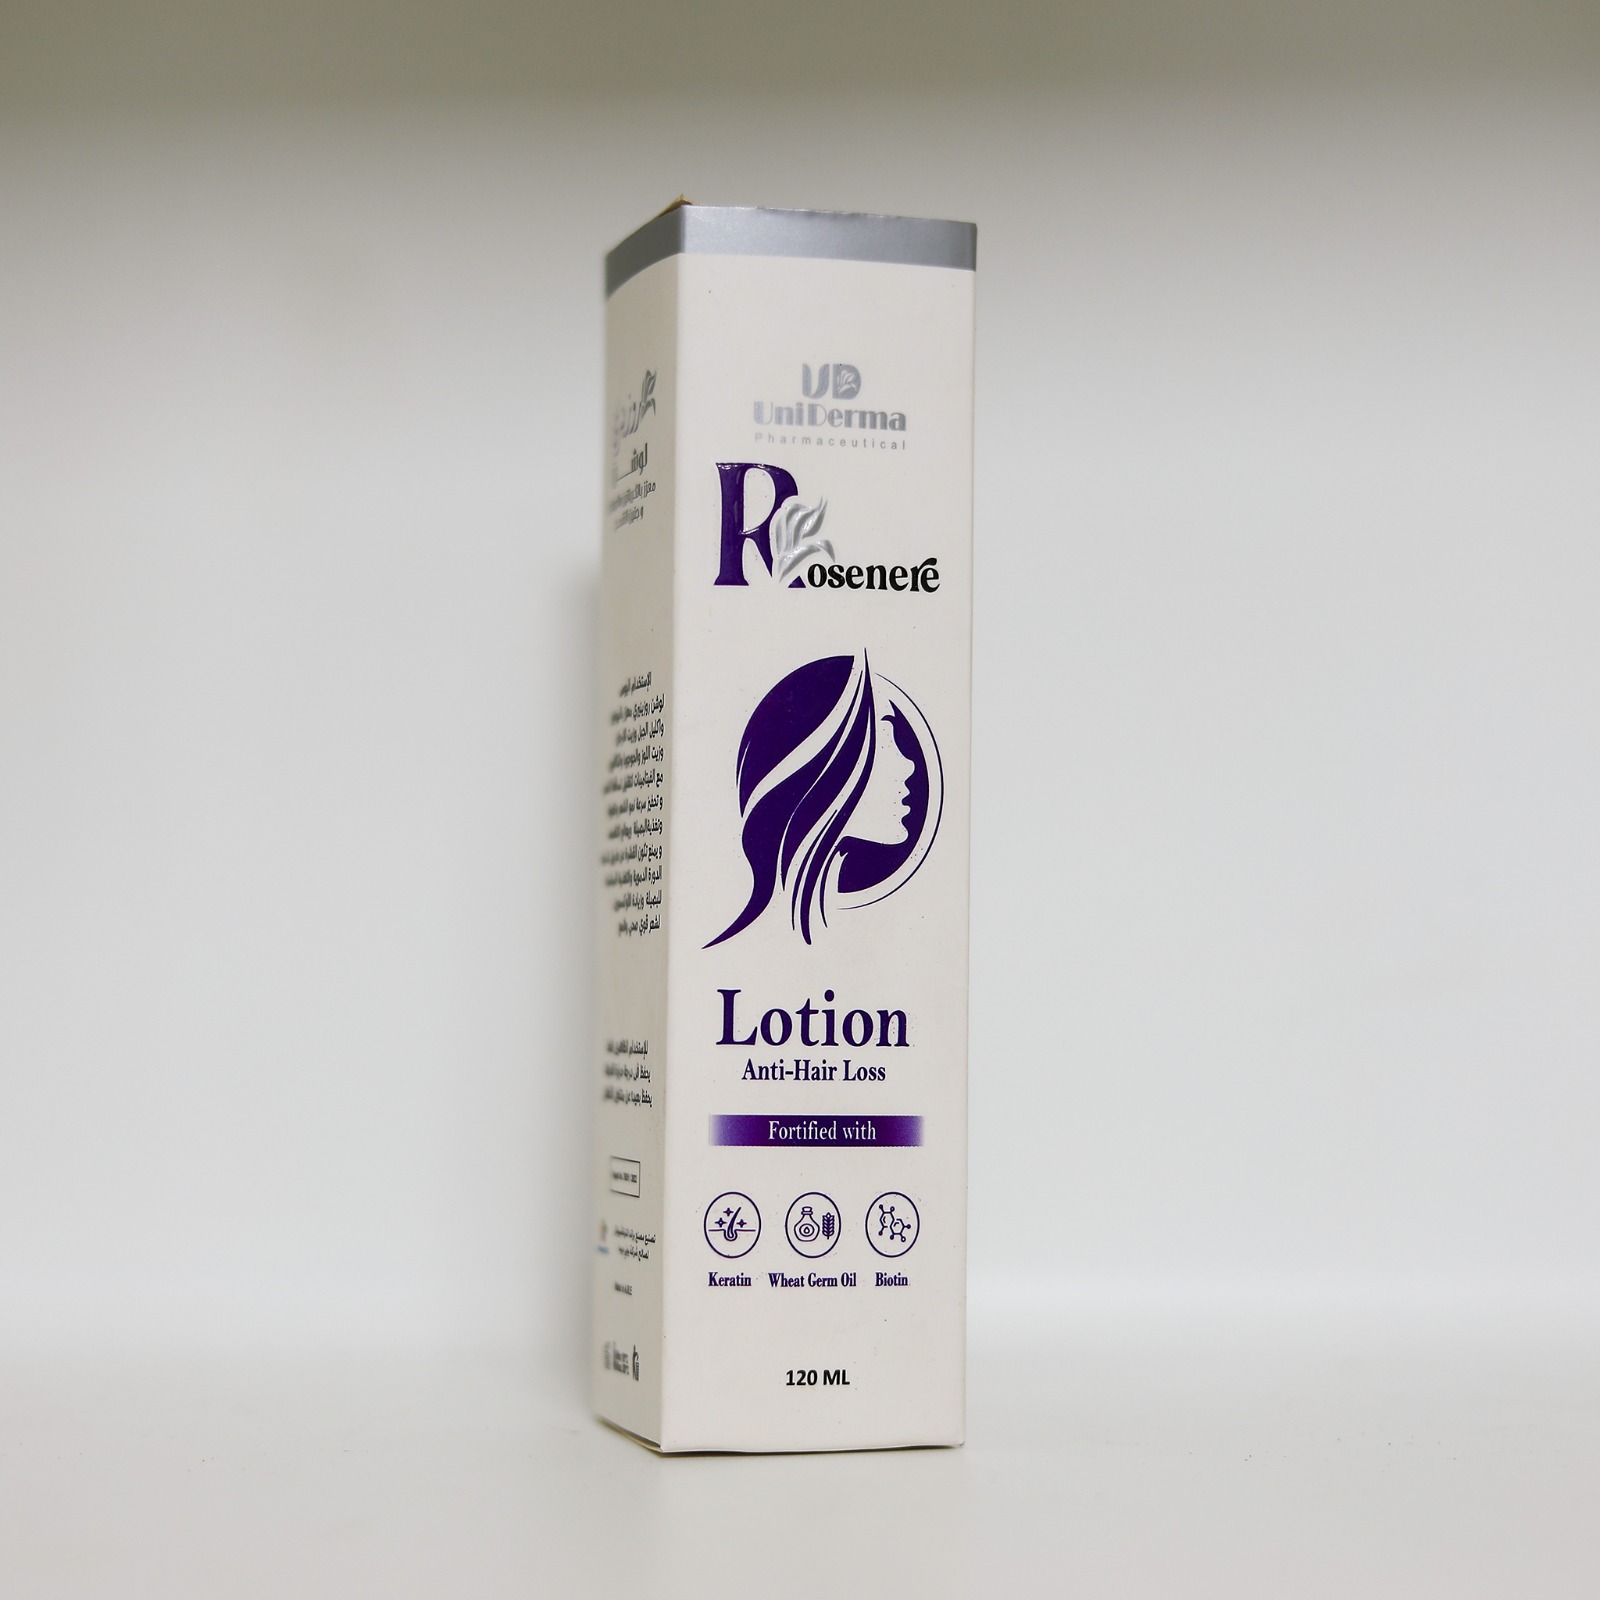 Rosenere hair lotion